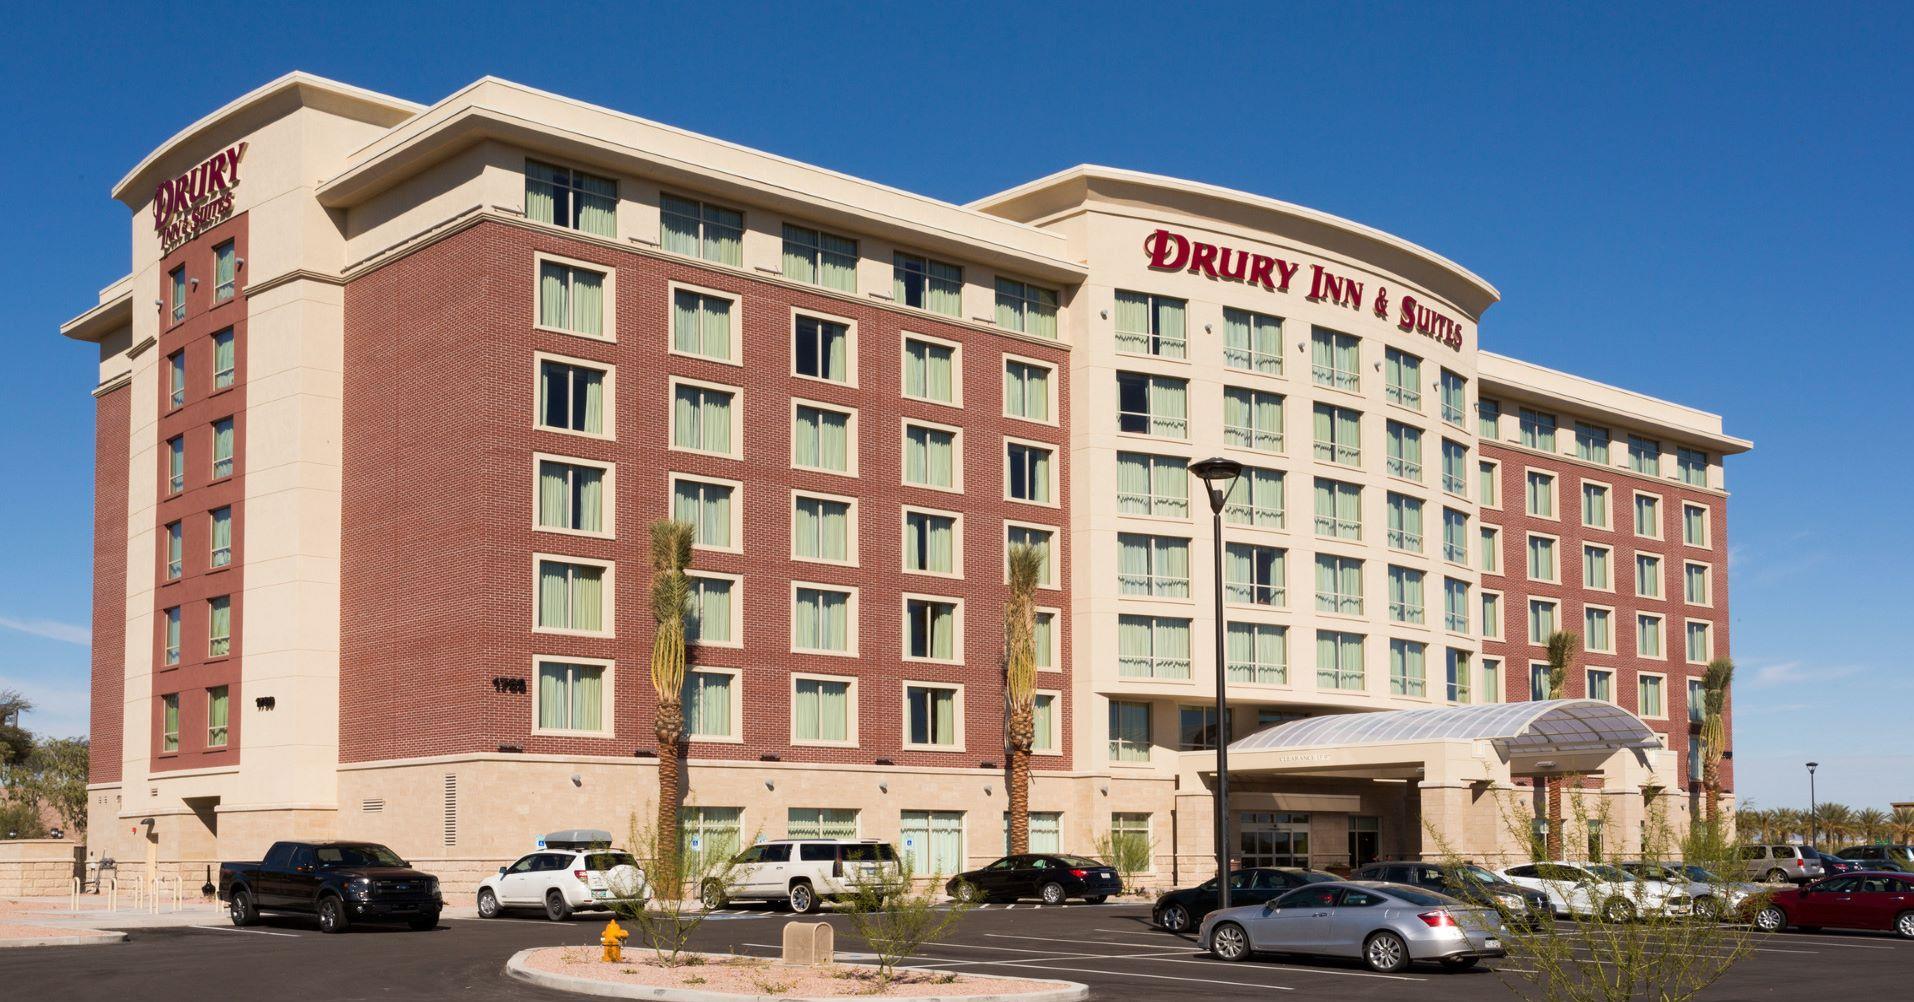 Drury Inn & Suites Phoenix Tempe in Tempe, AZ